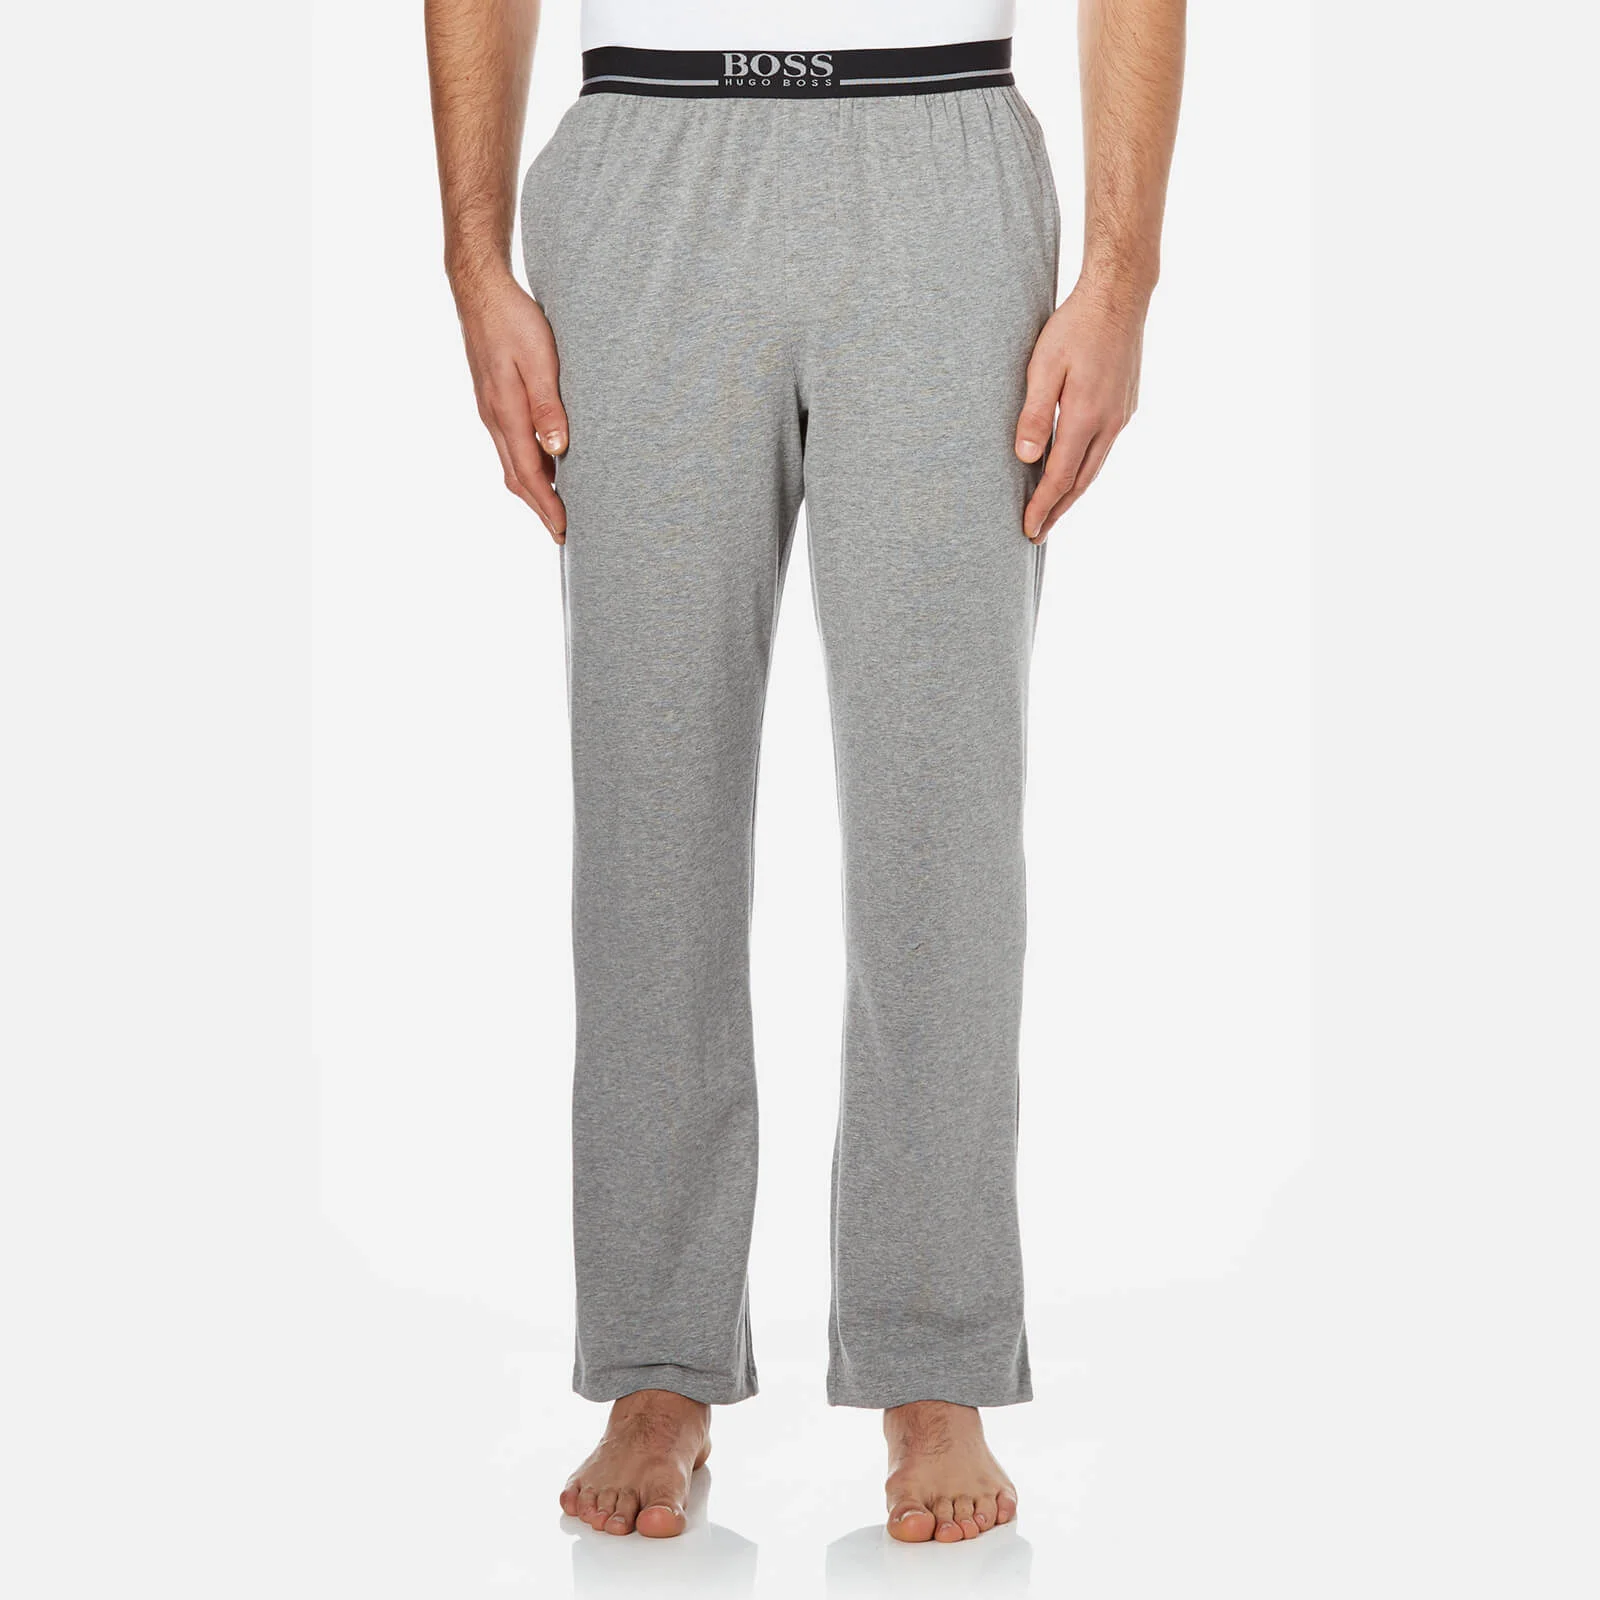 BOSS Hugo Boss Men's Cotton Lounge Pants - Grey Image 1